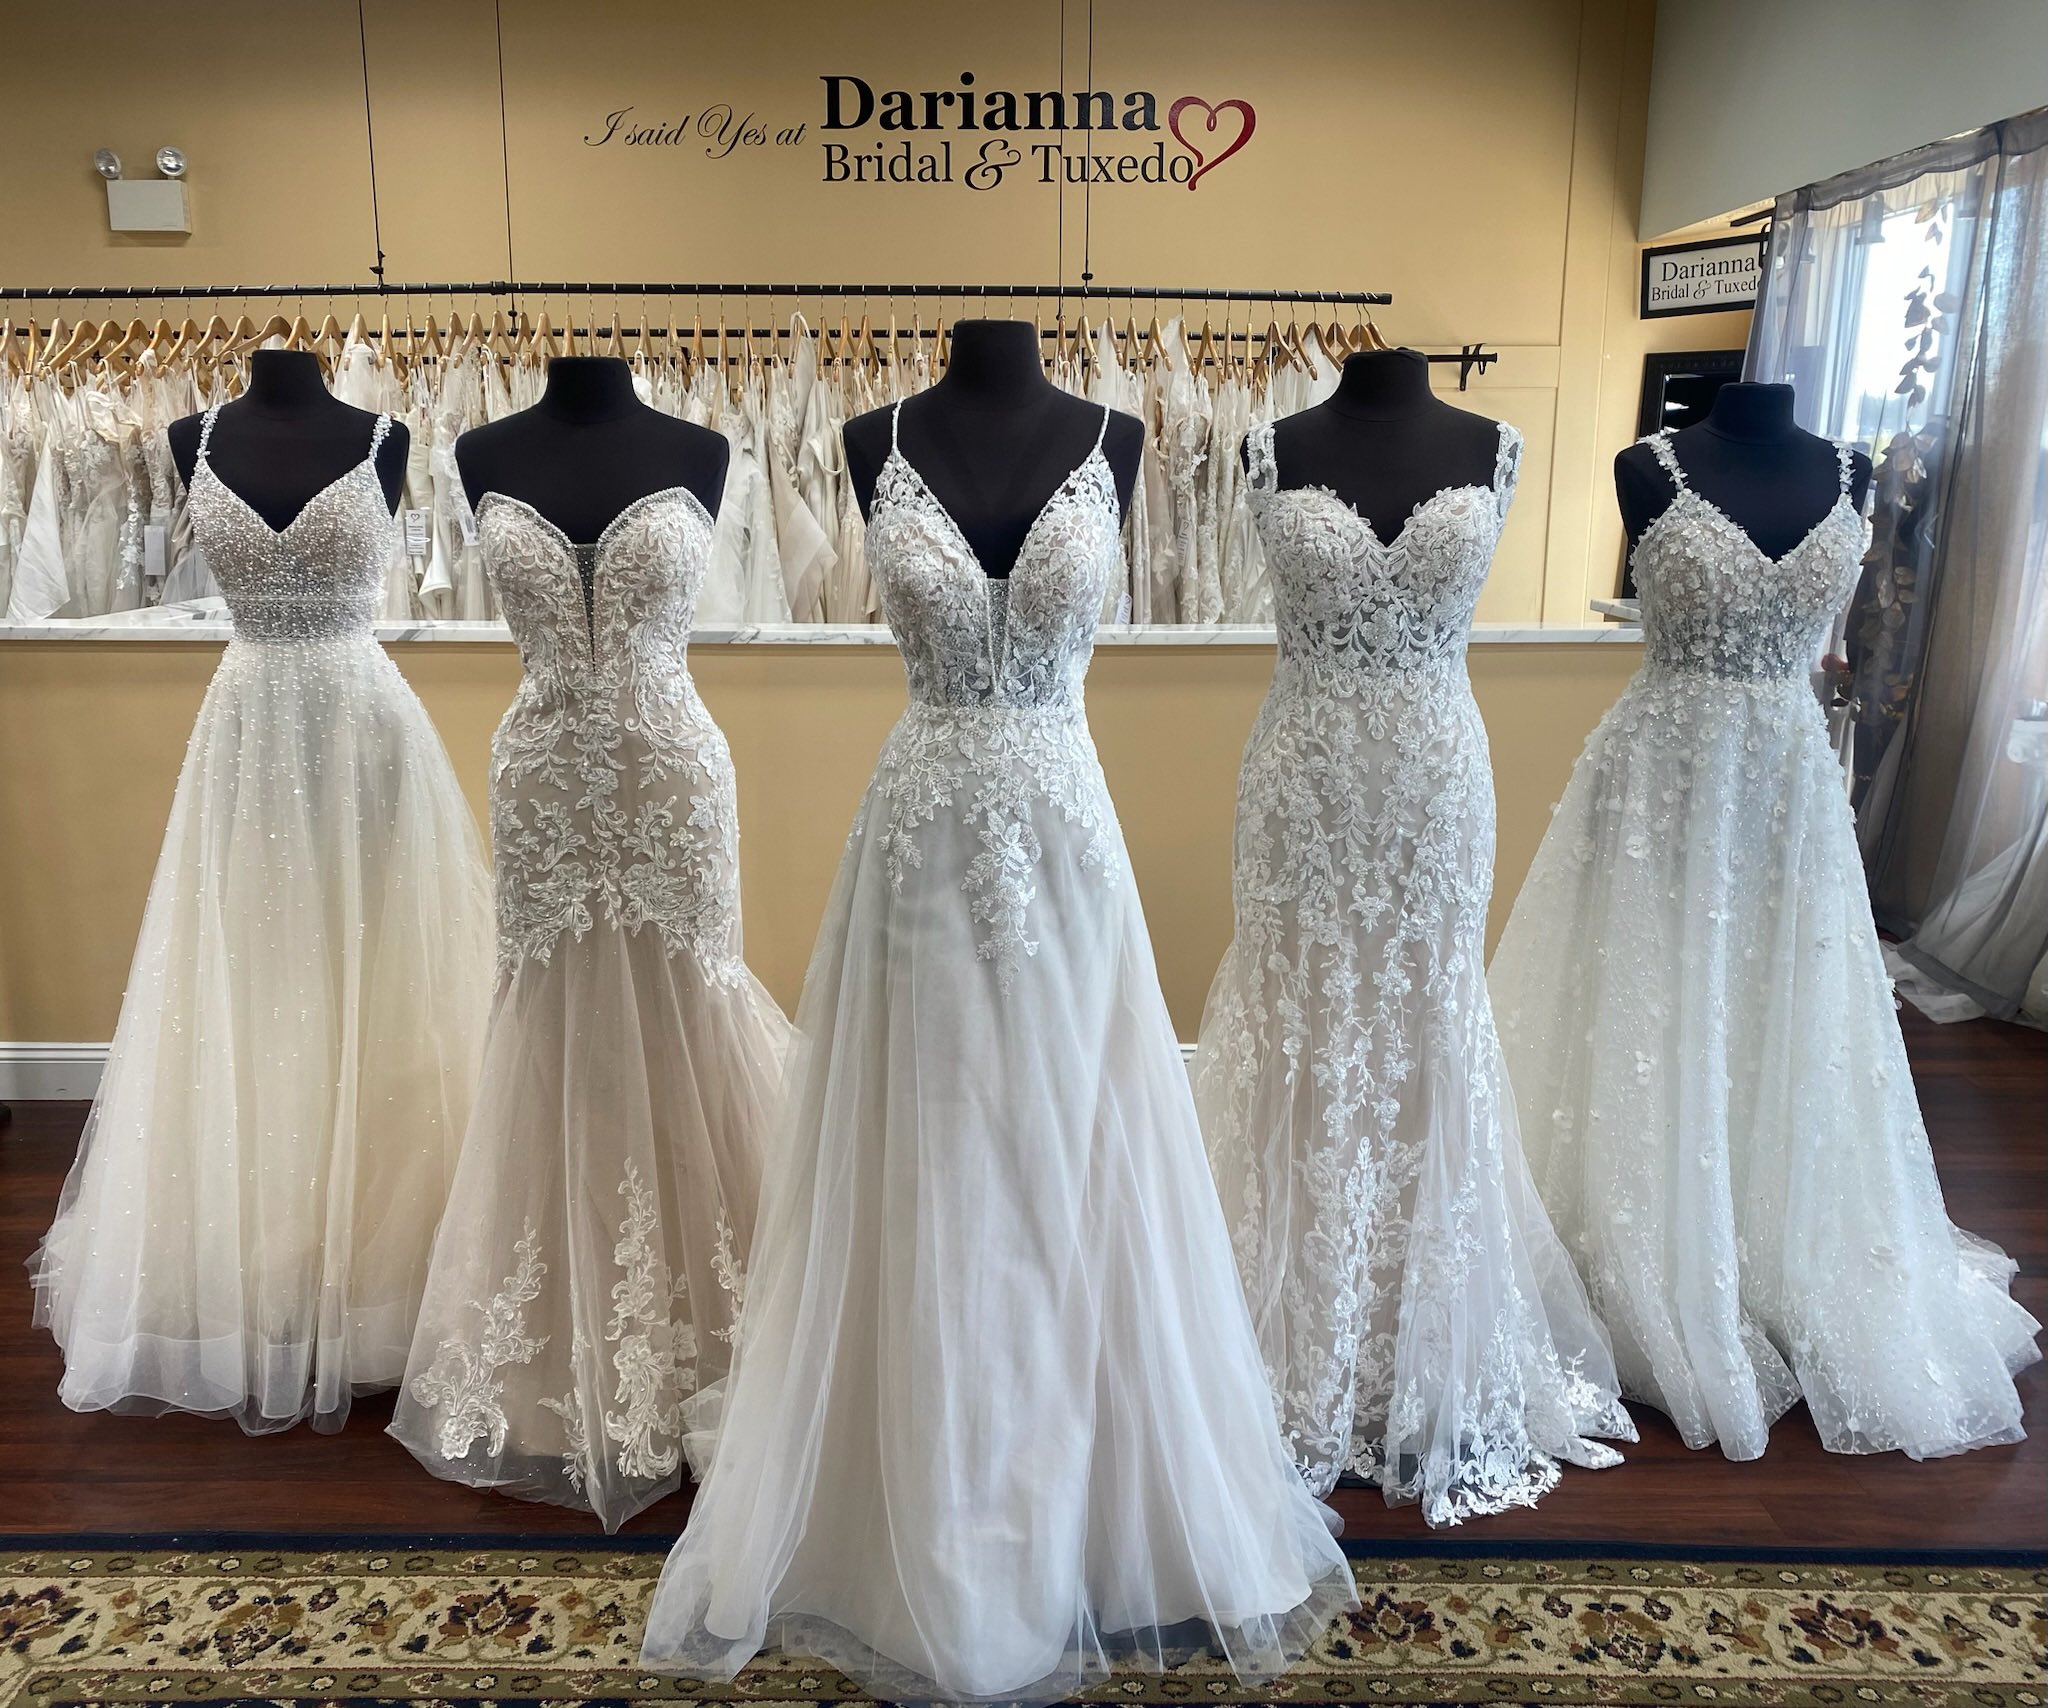 Mother of the Bride/Groom Dress Shopping - Darianna Bridal & Tuxedo